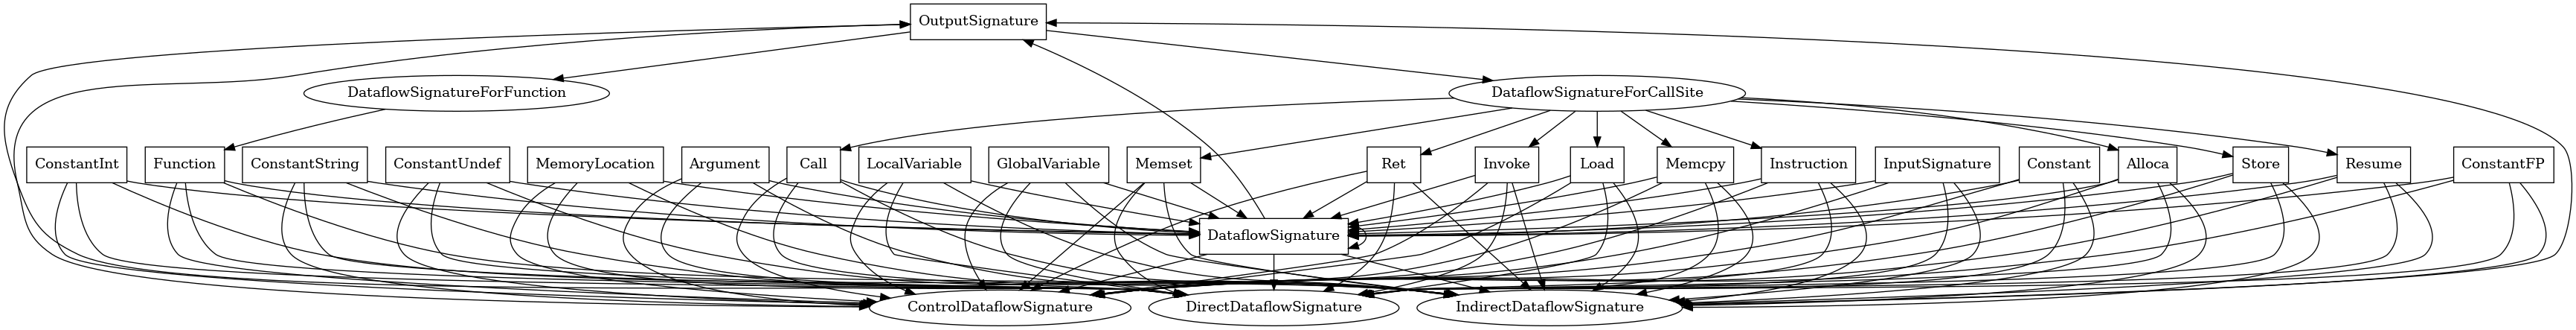 Entity-relationship diagram for OutputSignature nodes